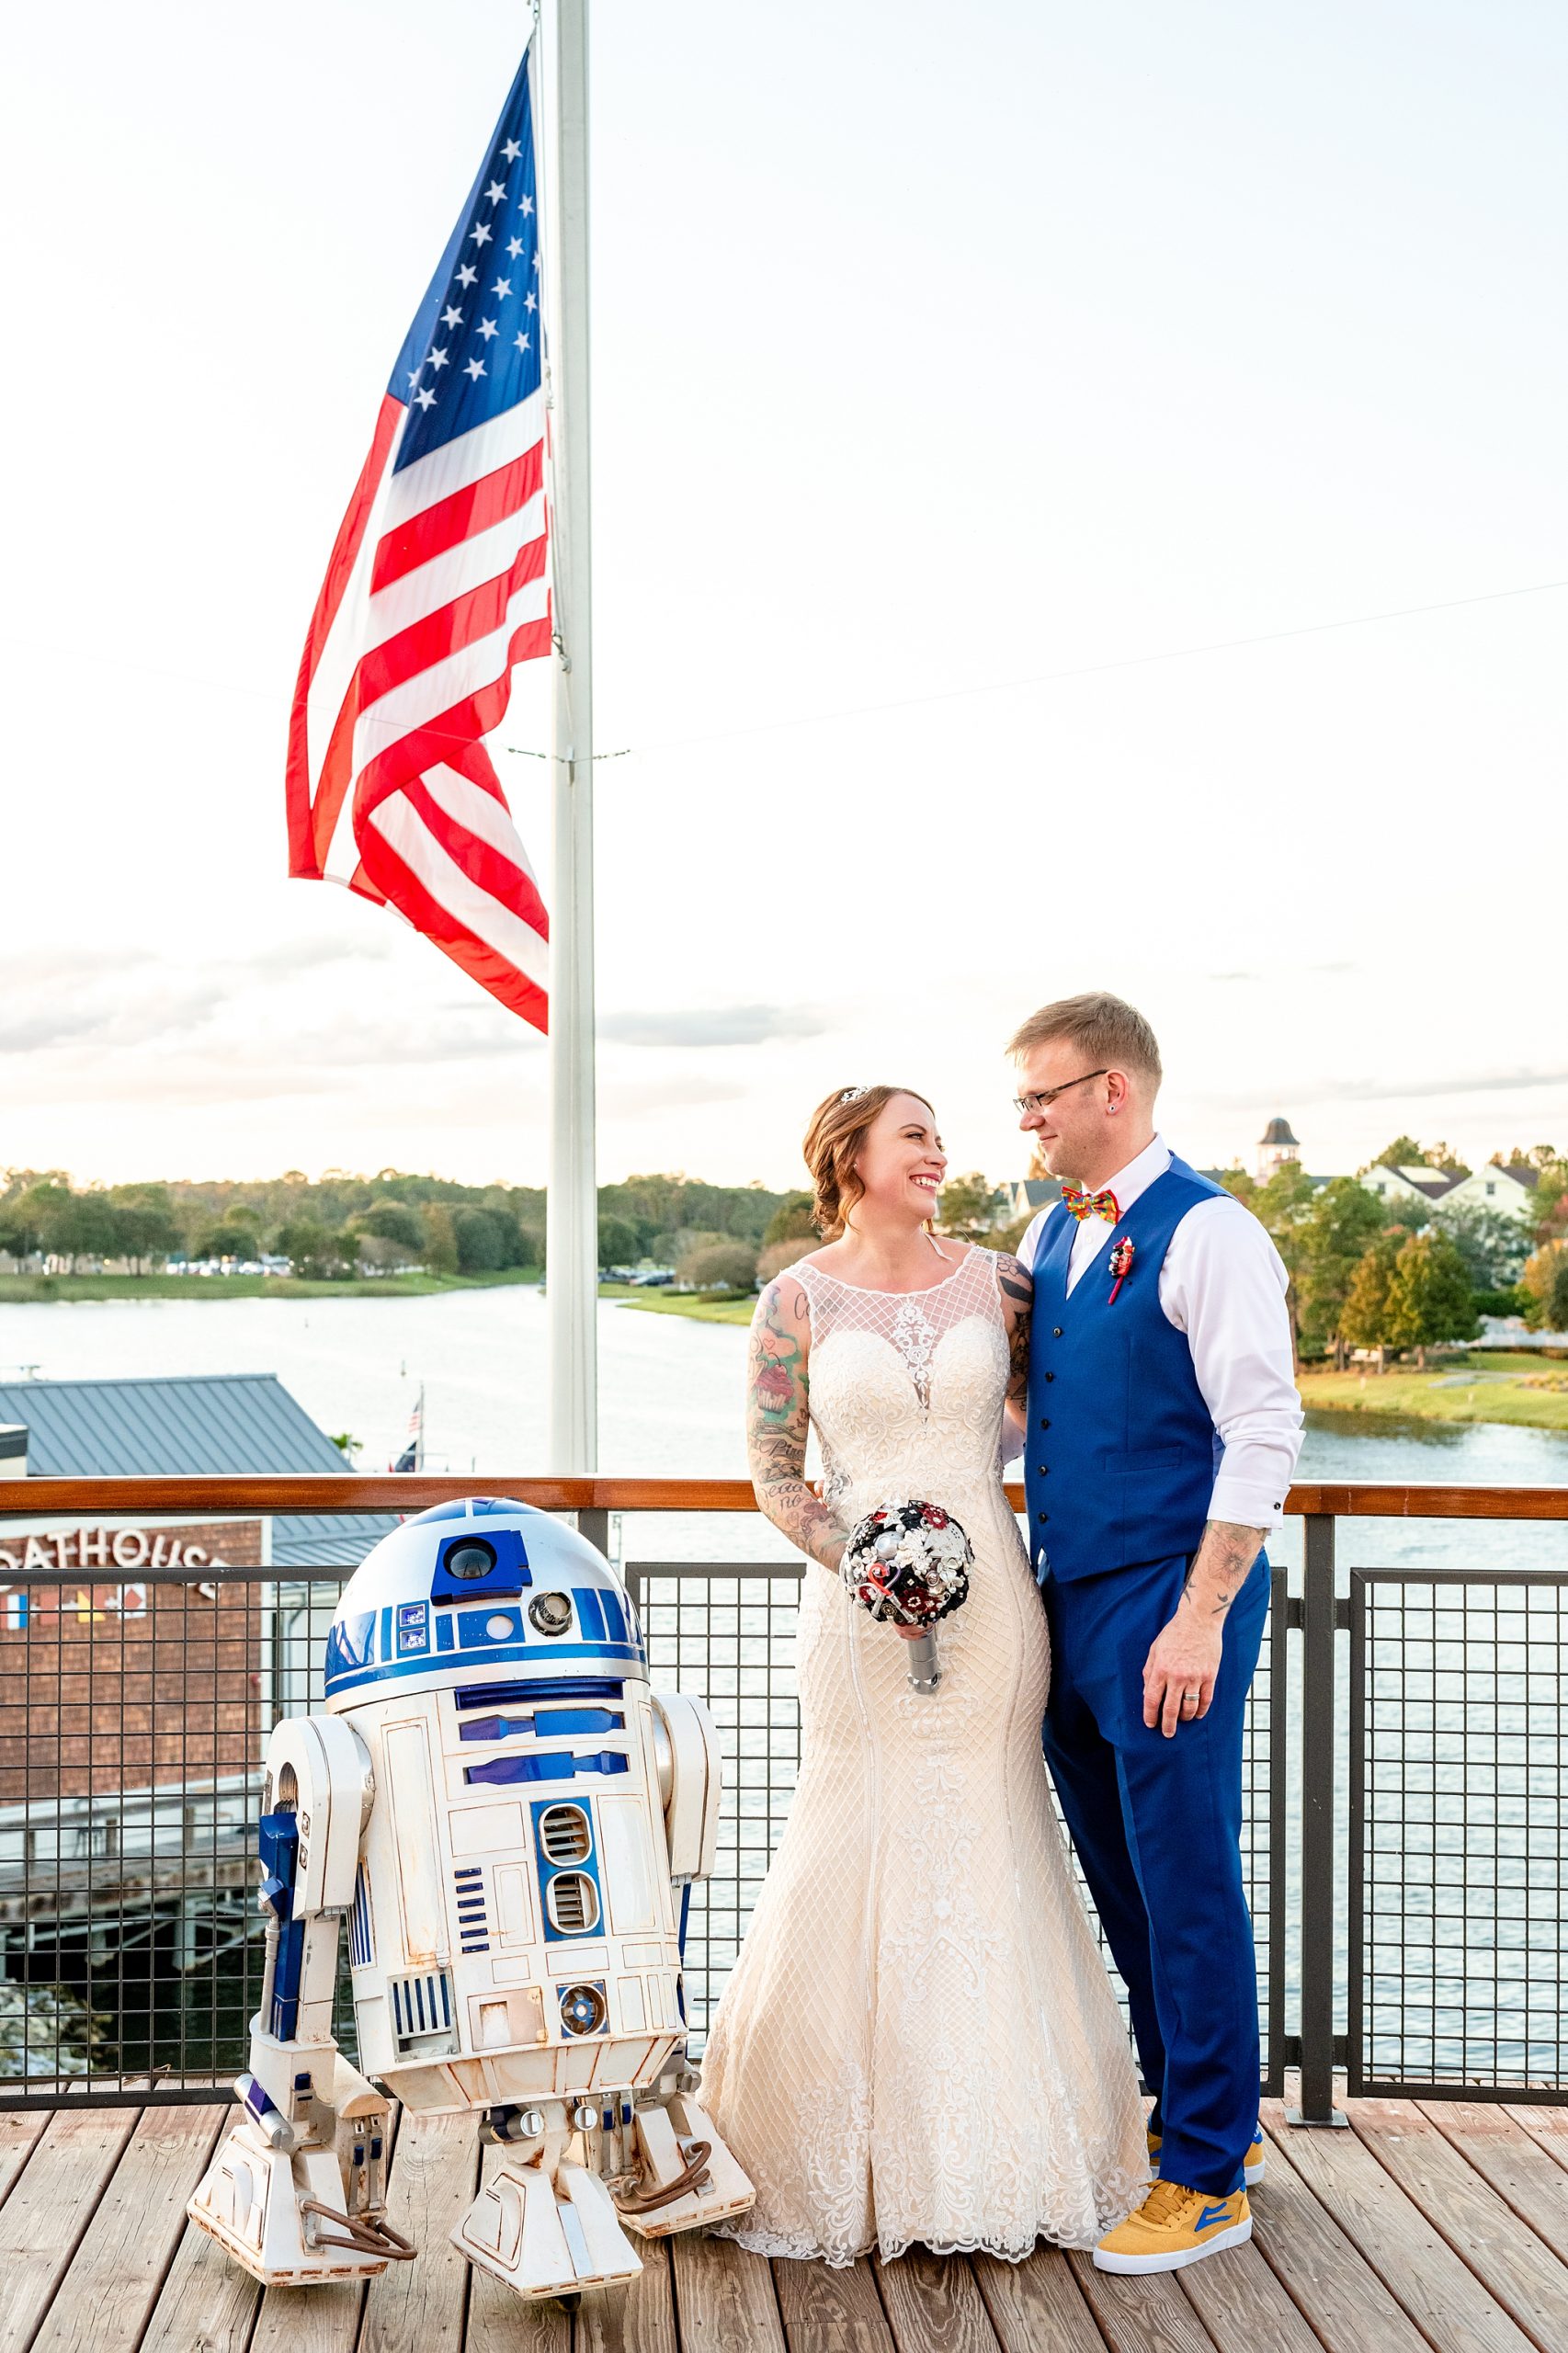 Starwars Wedding | Orlando Wedding Photographer